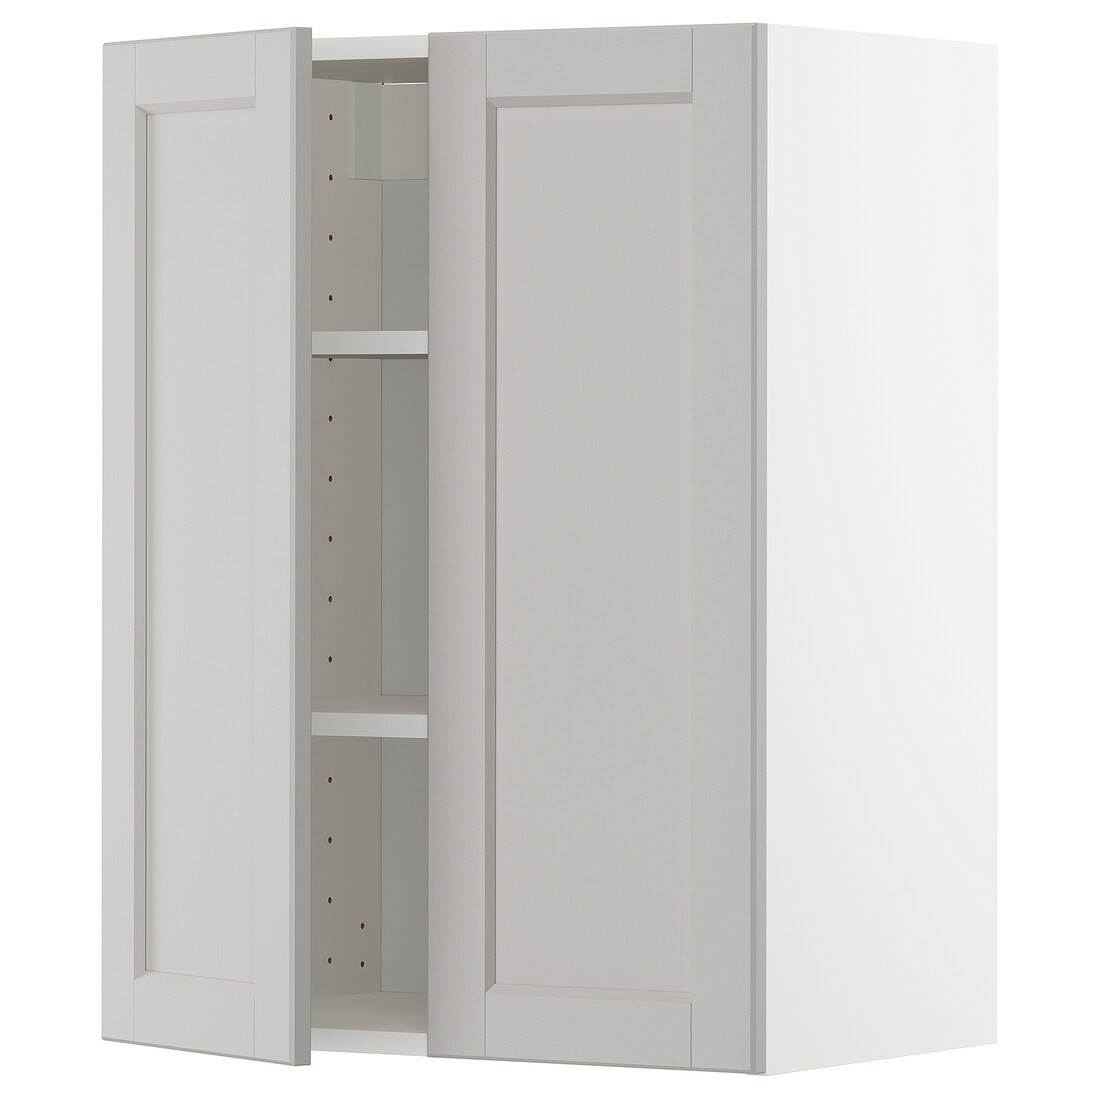 METOD МЕТОД Навесной шкаф с полками / 2 дверцы, белый / Lerhyttan светло-серый, 60x80 см